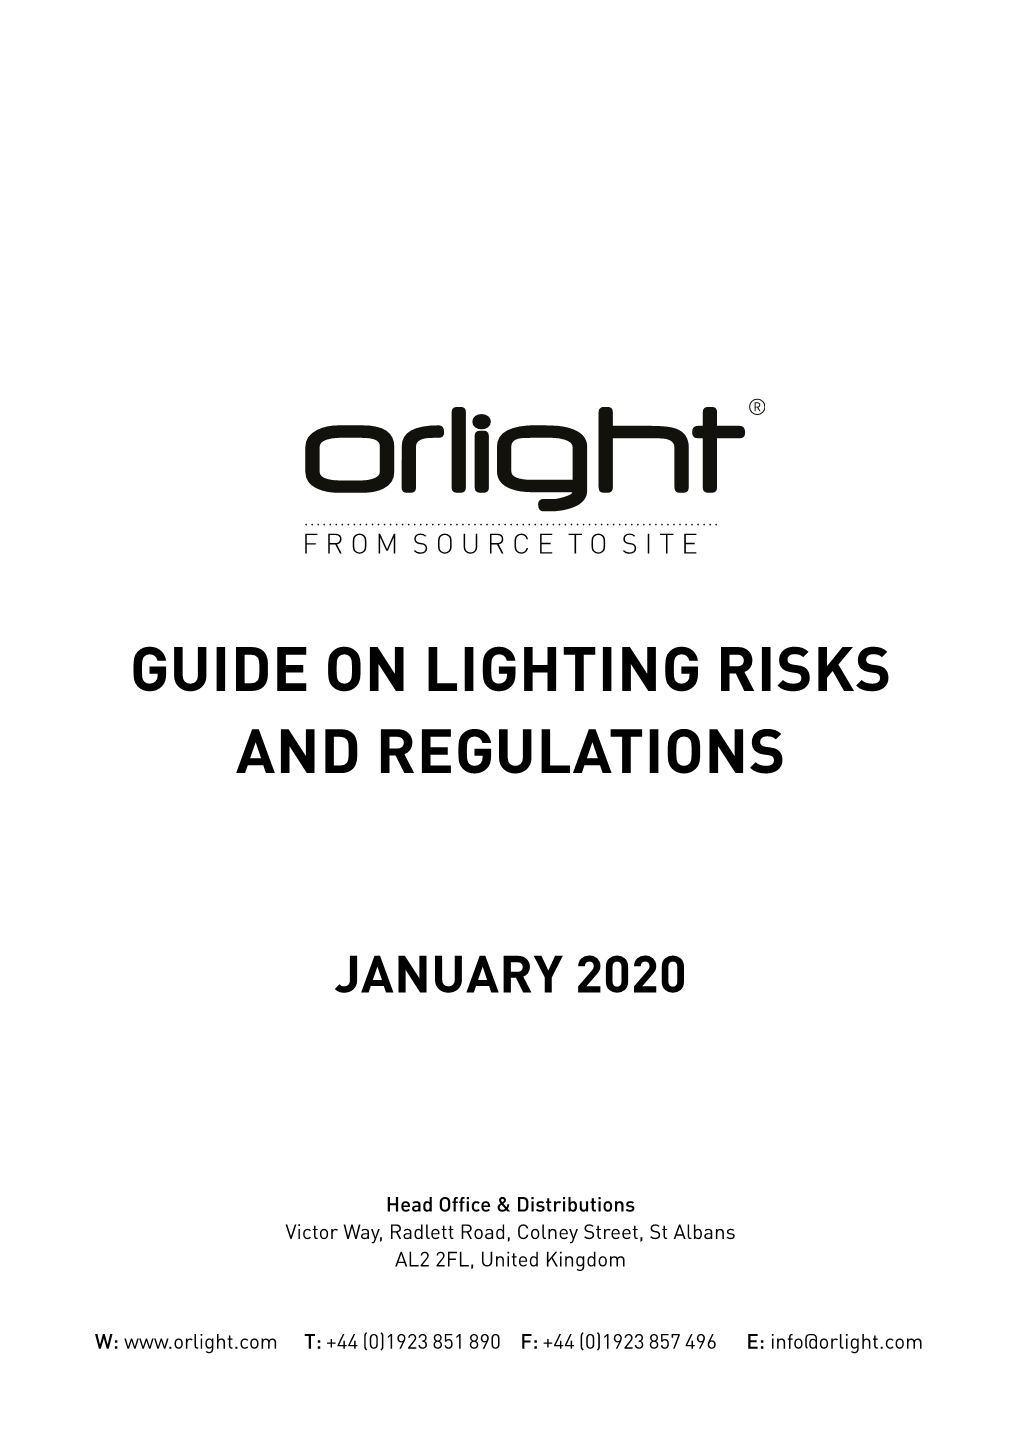 Orlight Guide on Lighting Risks and Regulations 2020